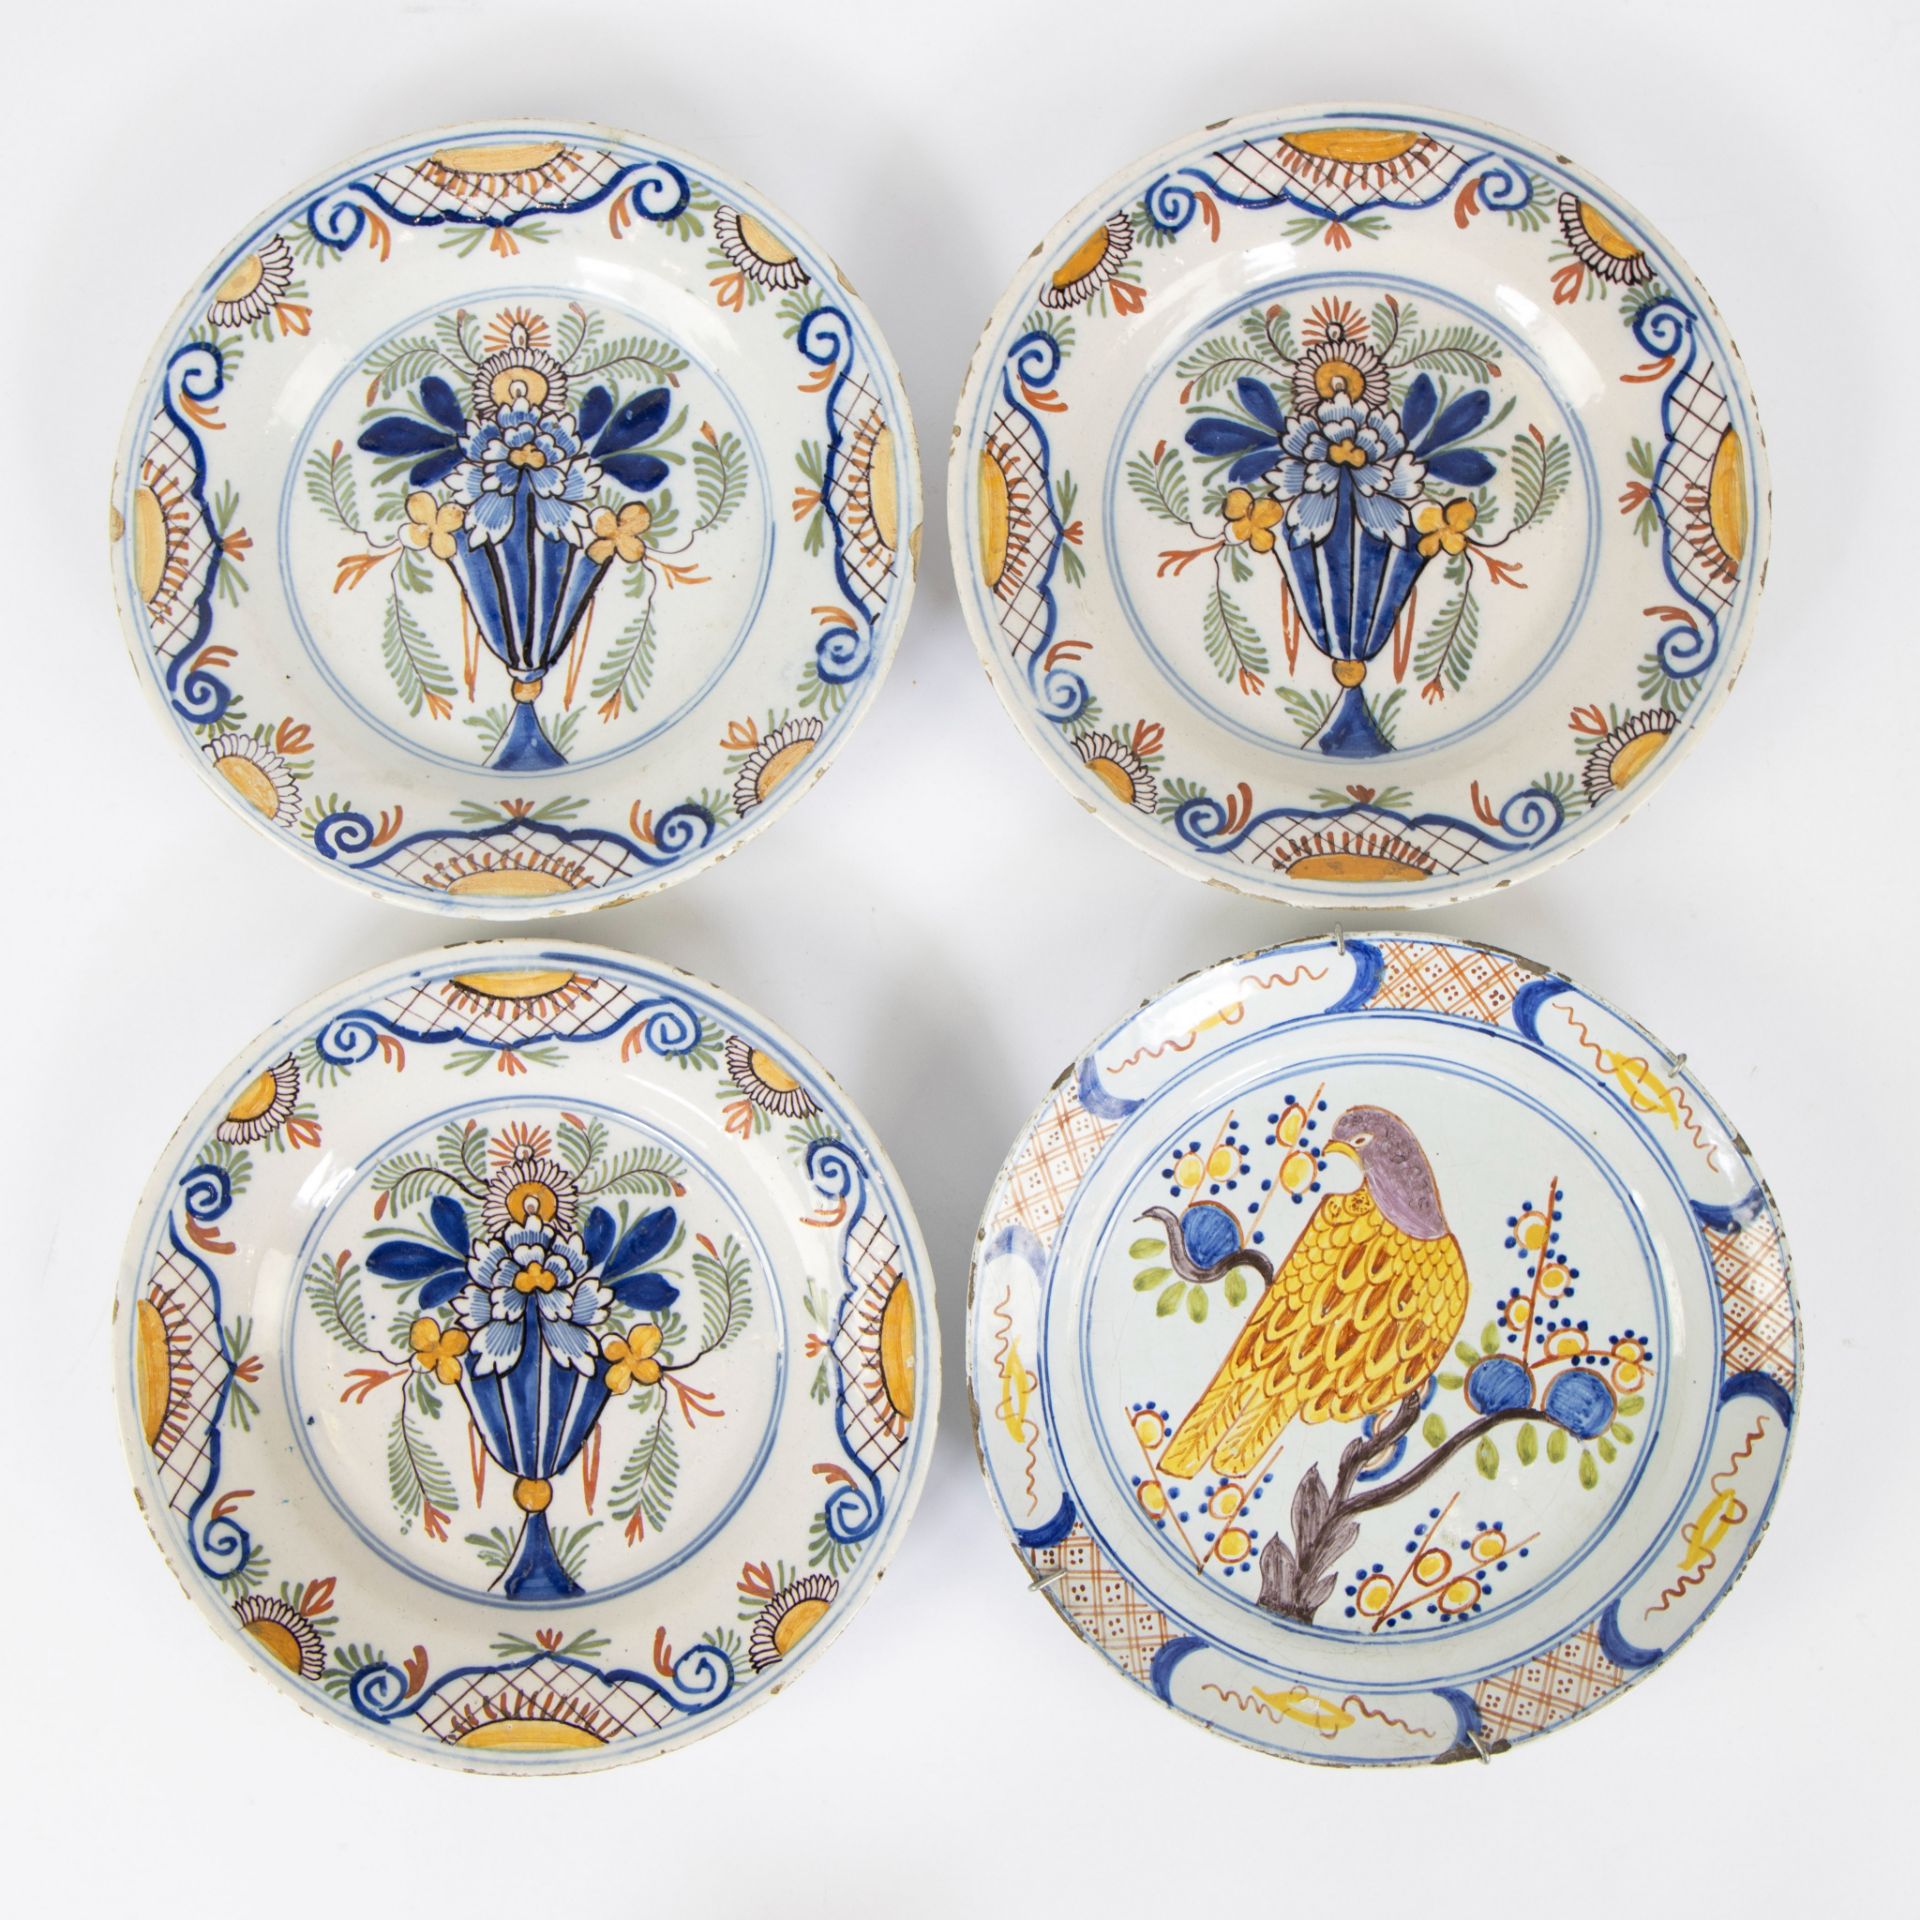 Lot 4 polychrome Delft plates, 18th century